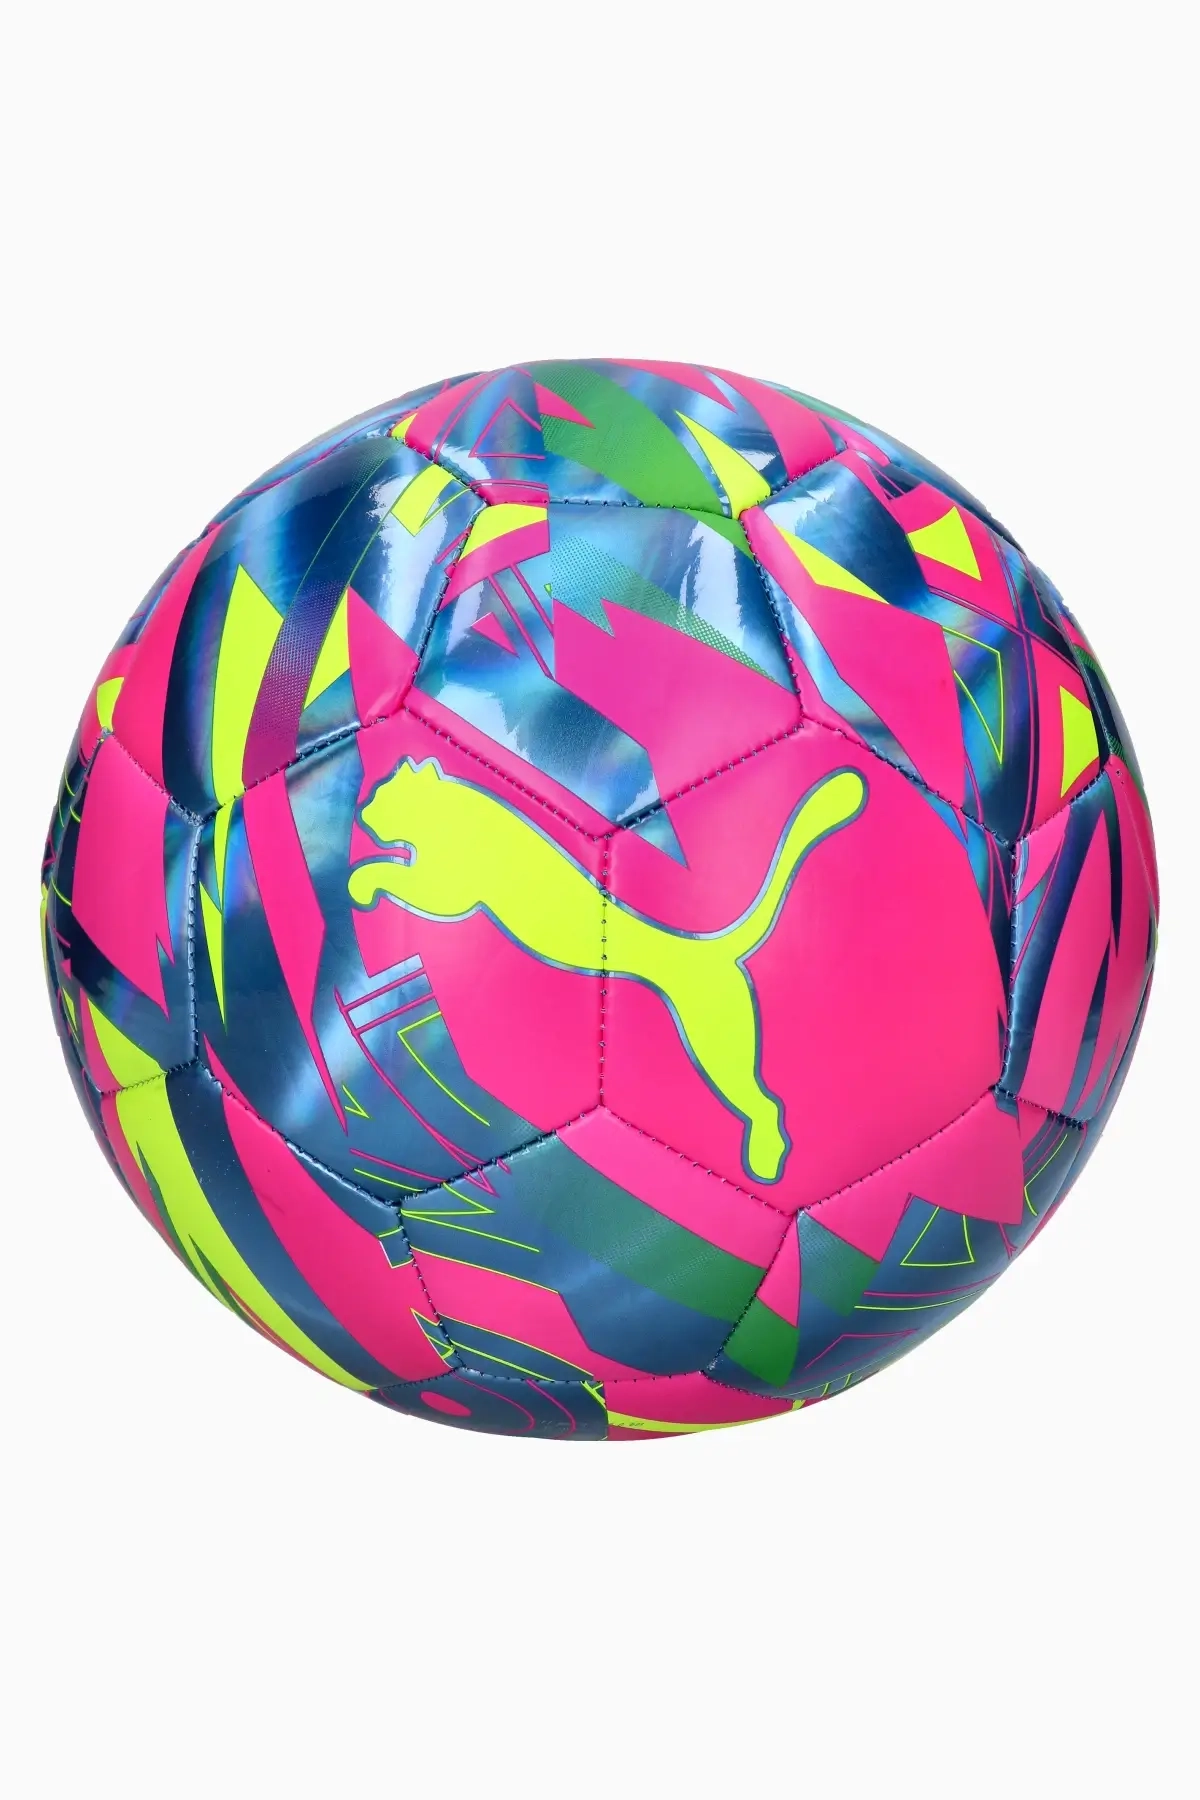 Football R-GOL.com Graphic Puma - | & equipment Ball boots size Energy 5